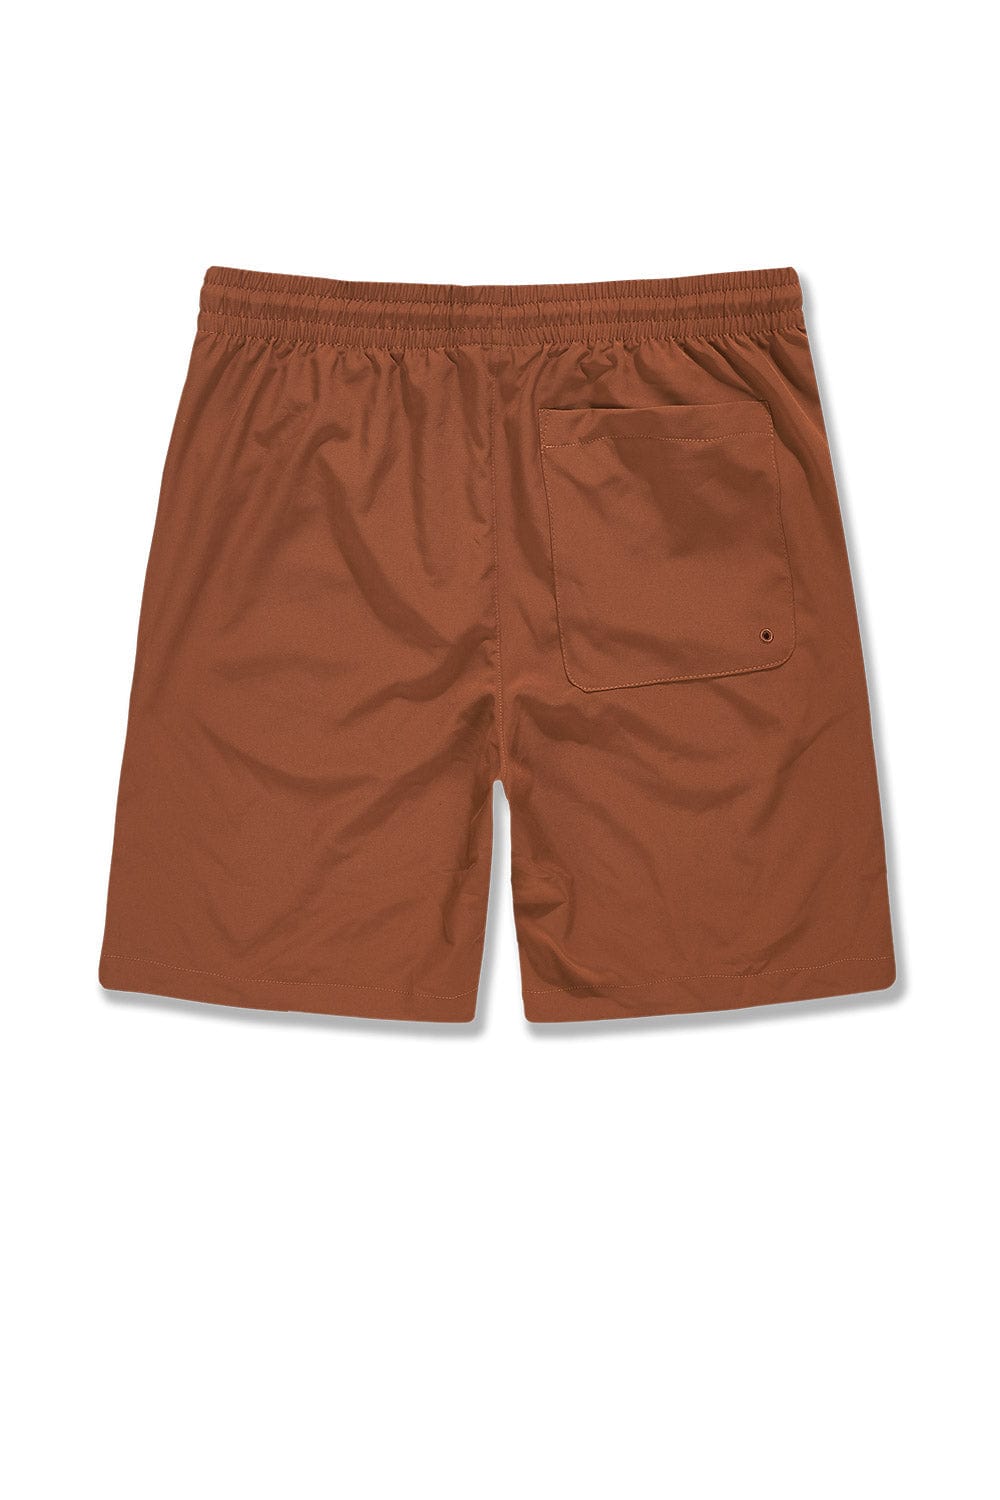 BB Retro - Bay Area Shorts (Chocolate)